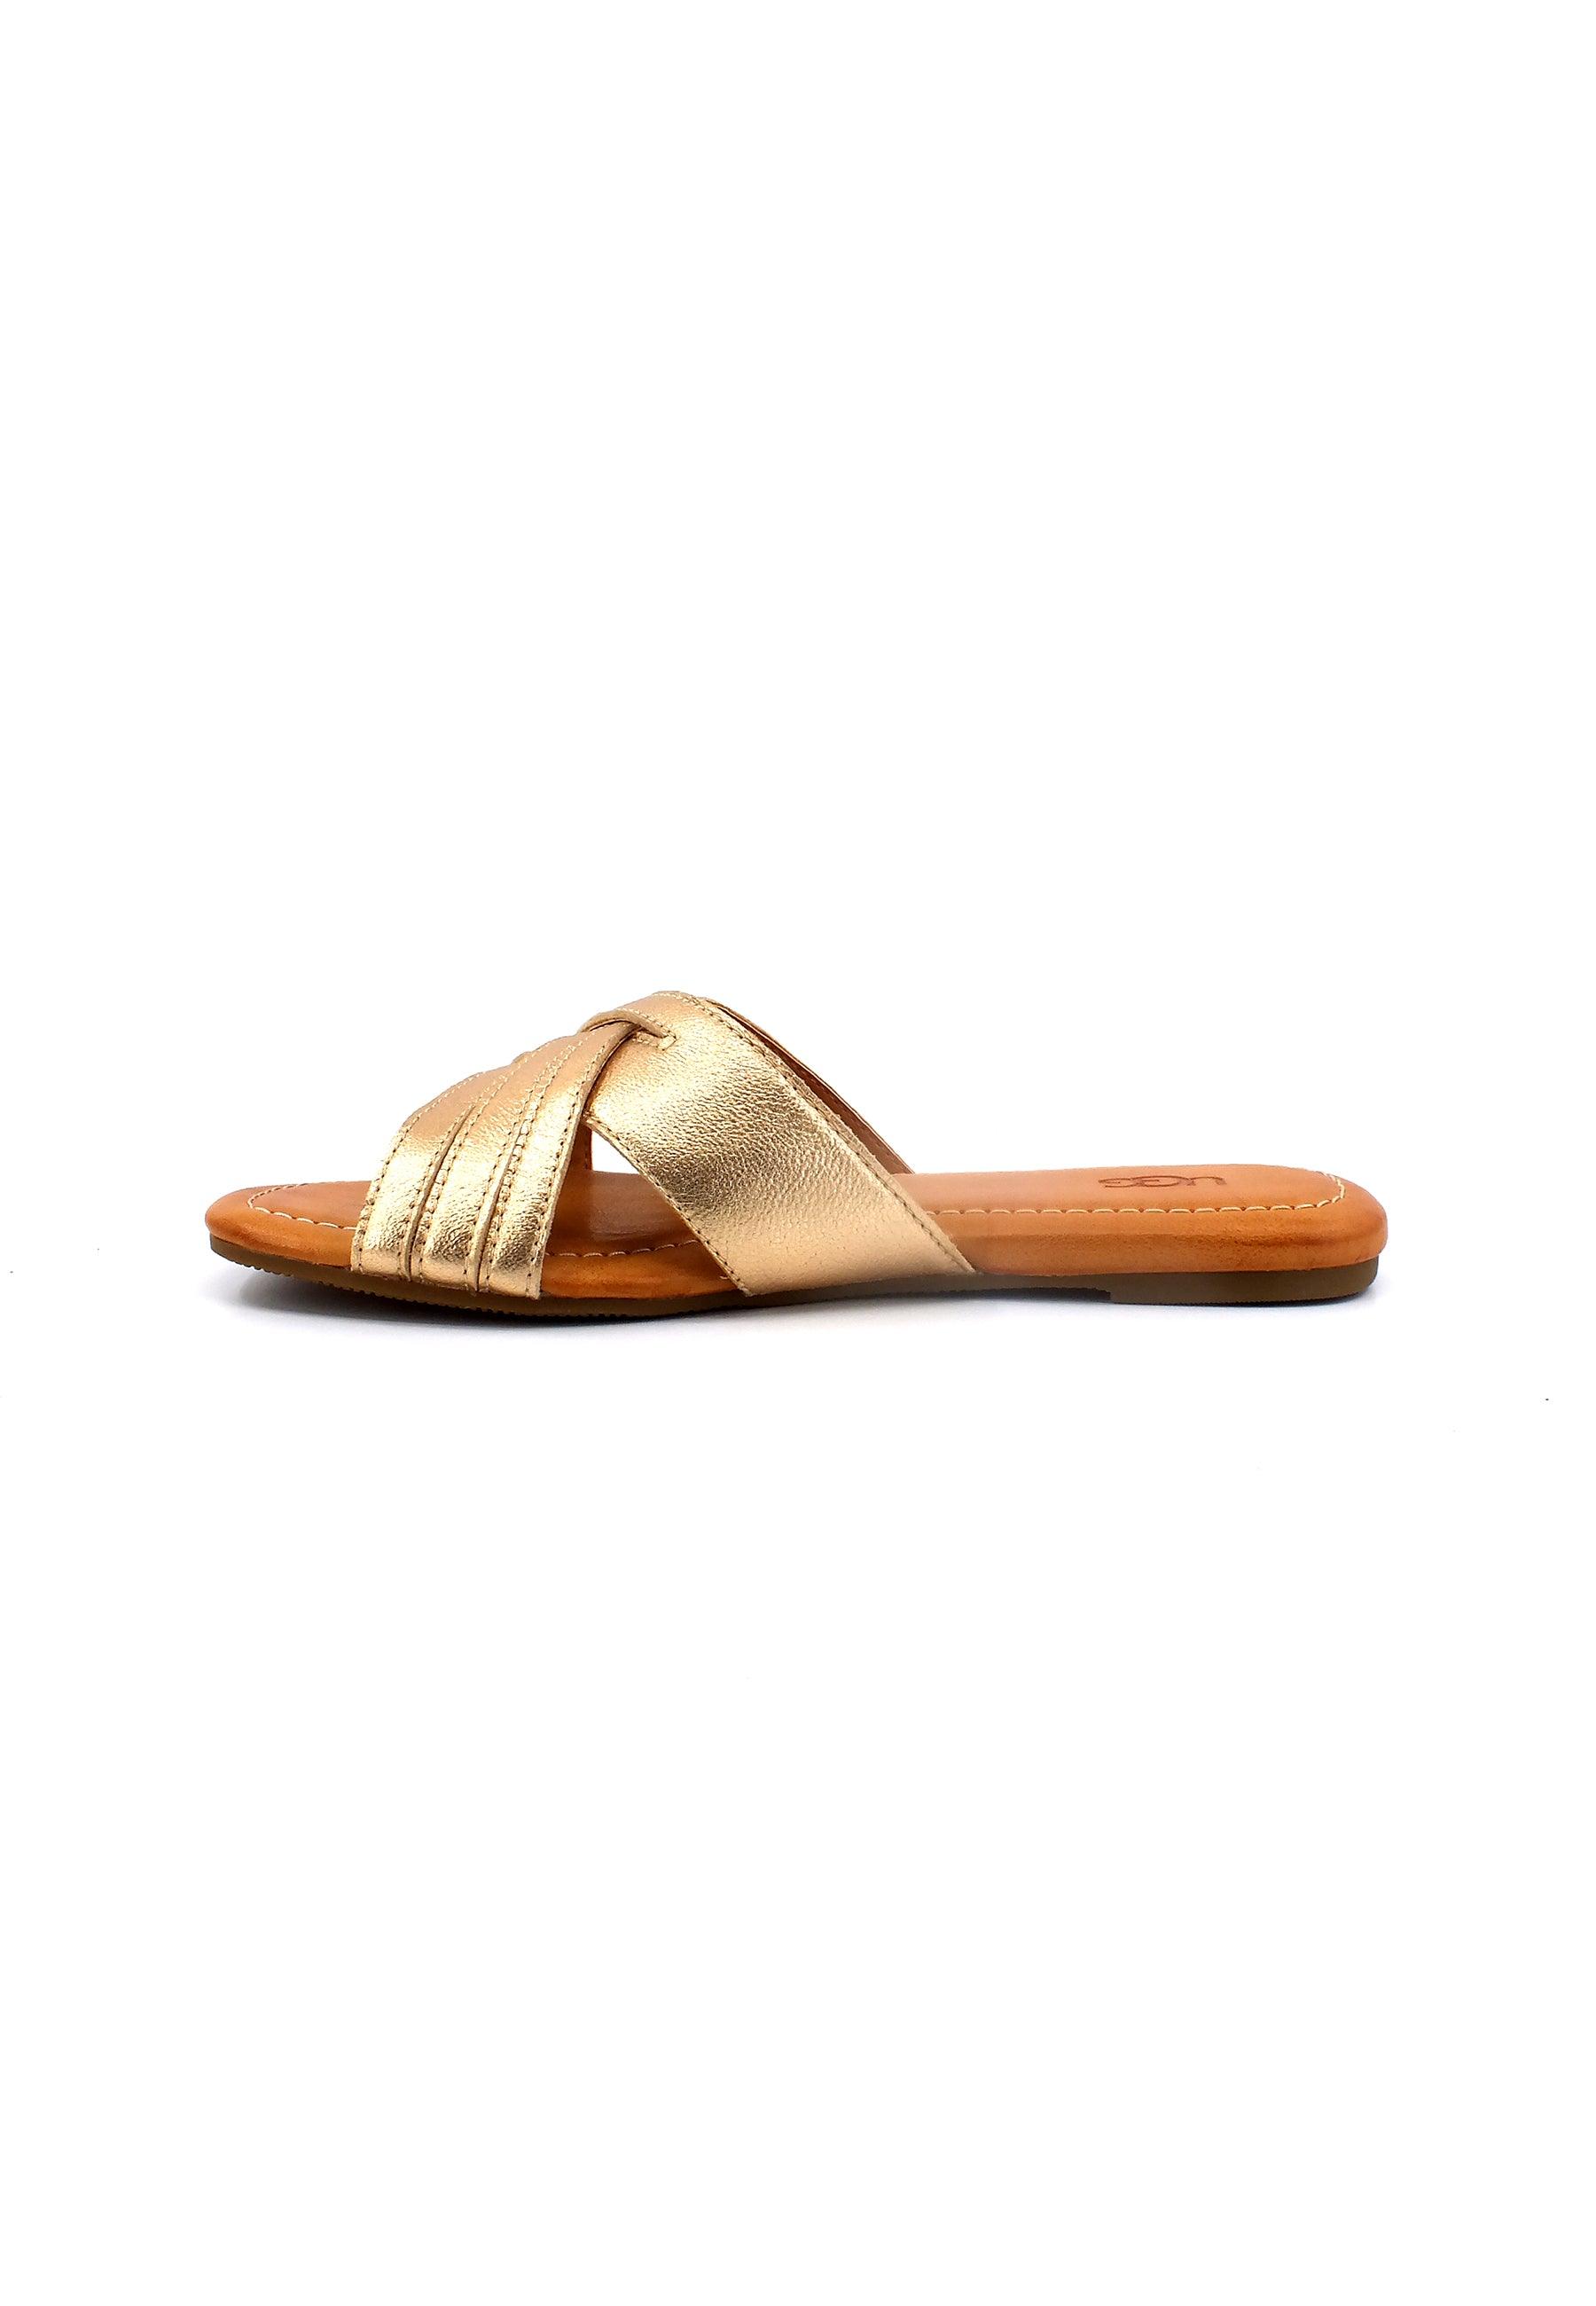 UGG Kenleigh Slide Ciabatta Donna Gold Metallic W1142712 - Sandrini Calzature e Abbigliamento